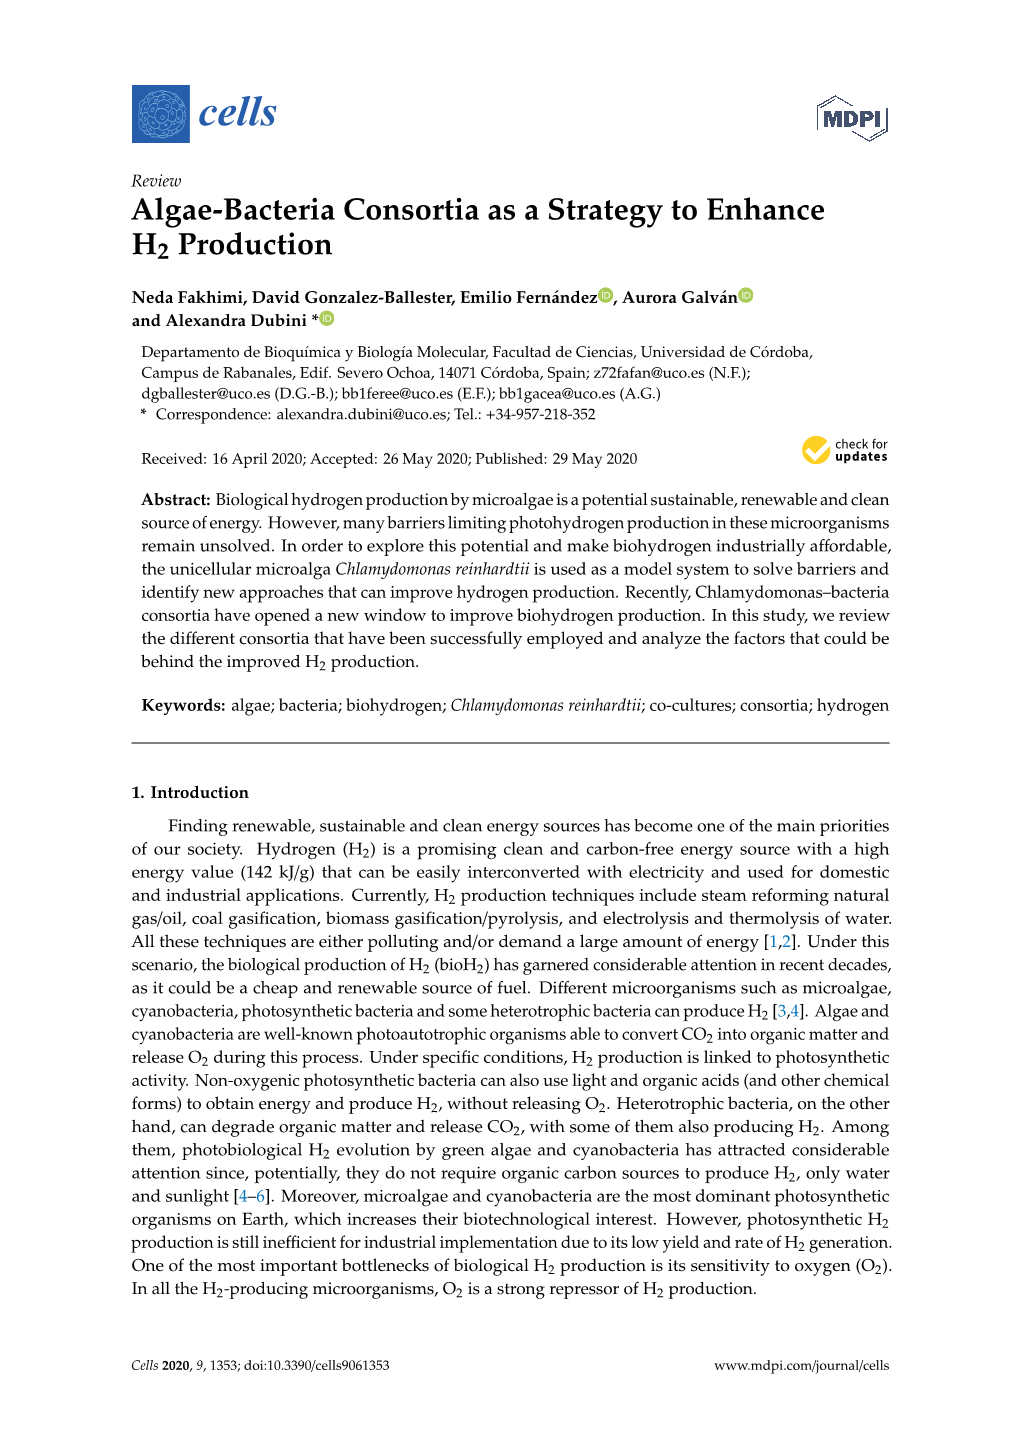 Algae-Bacteria Consortia As a Strategy to Enhance H2 Production